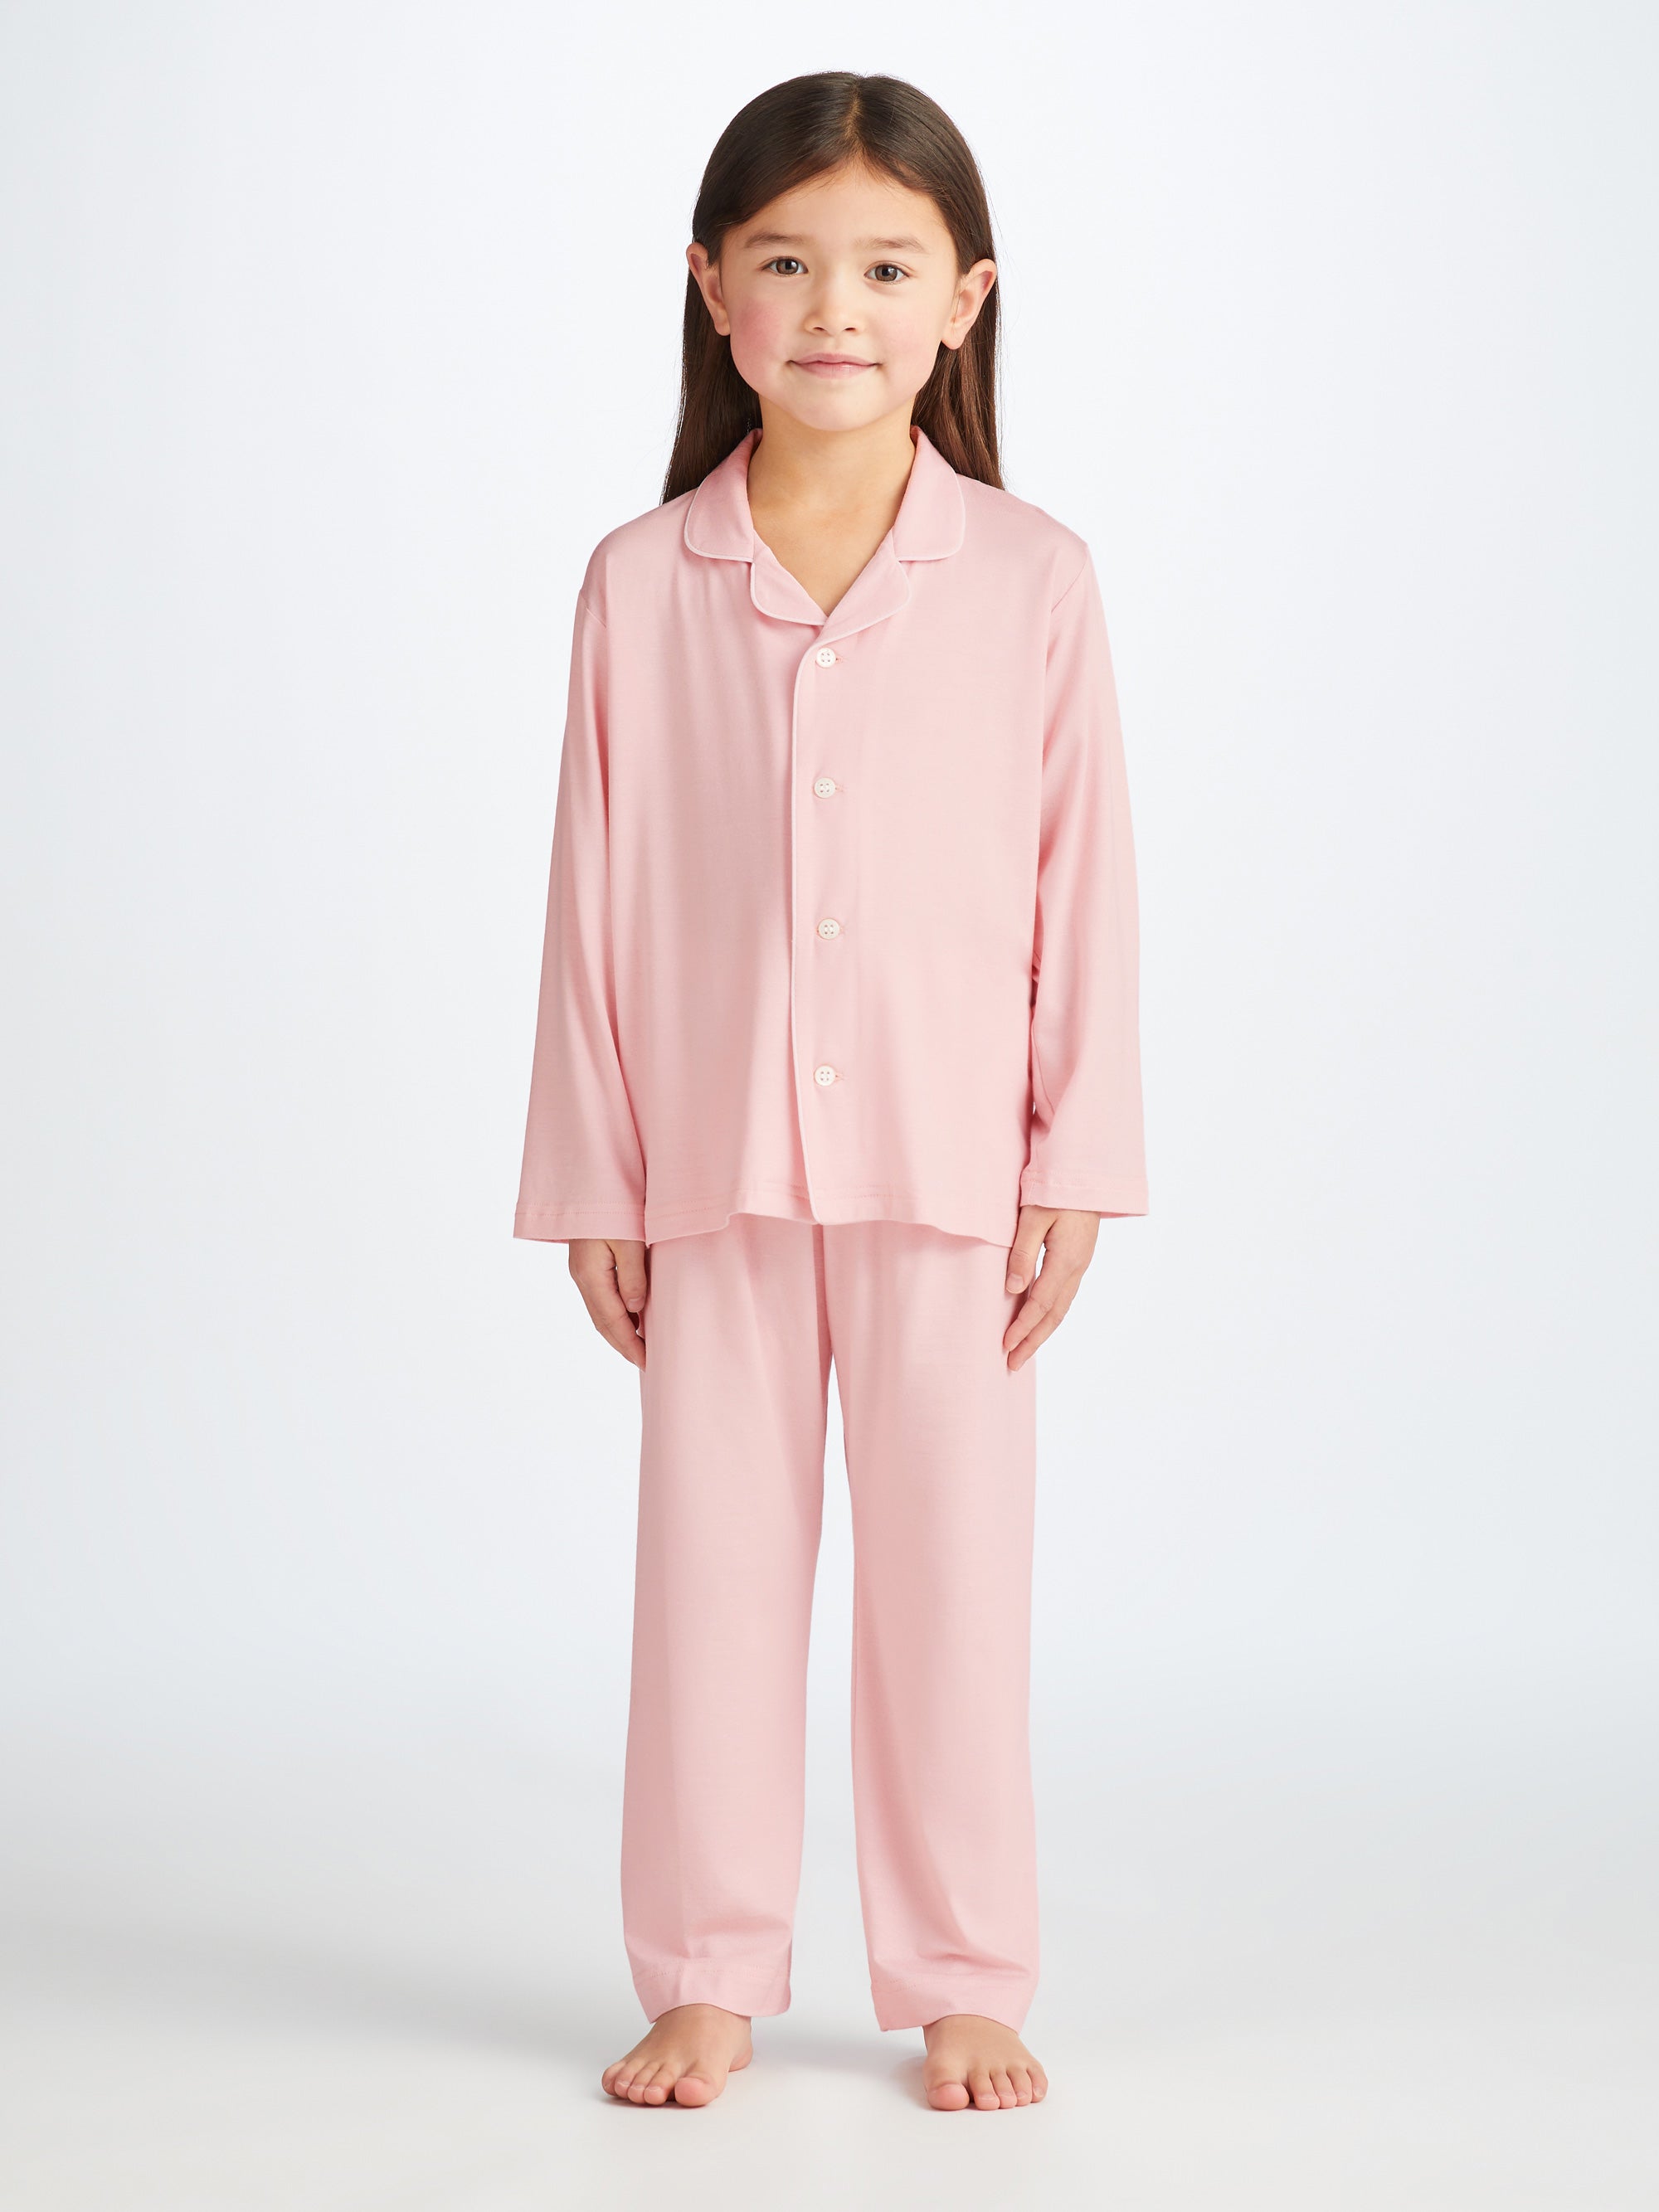 Kids' Pyjamas Lara Micro Modal Stretch Ballet Pink